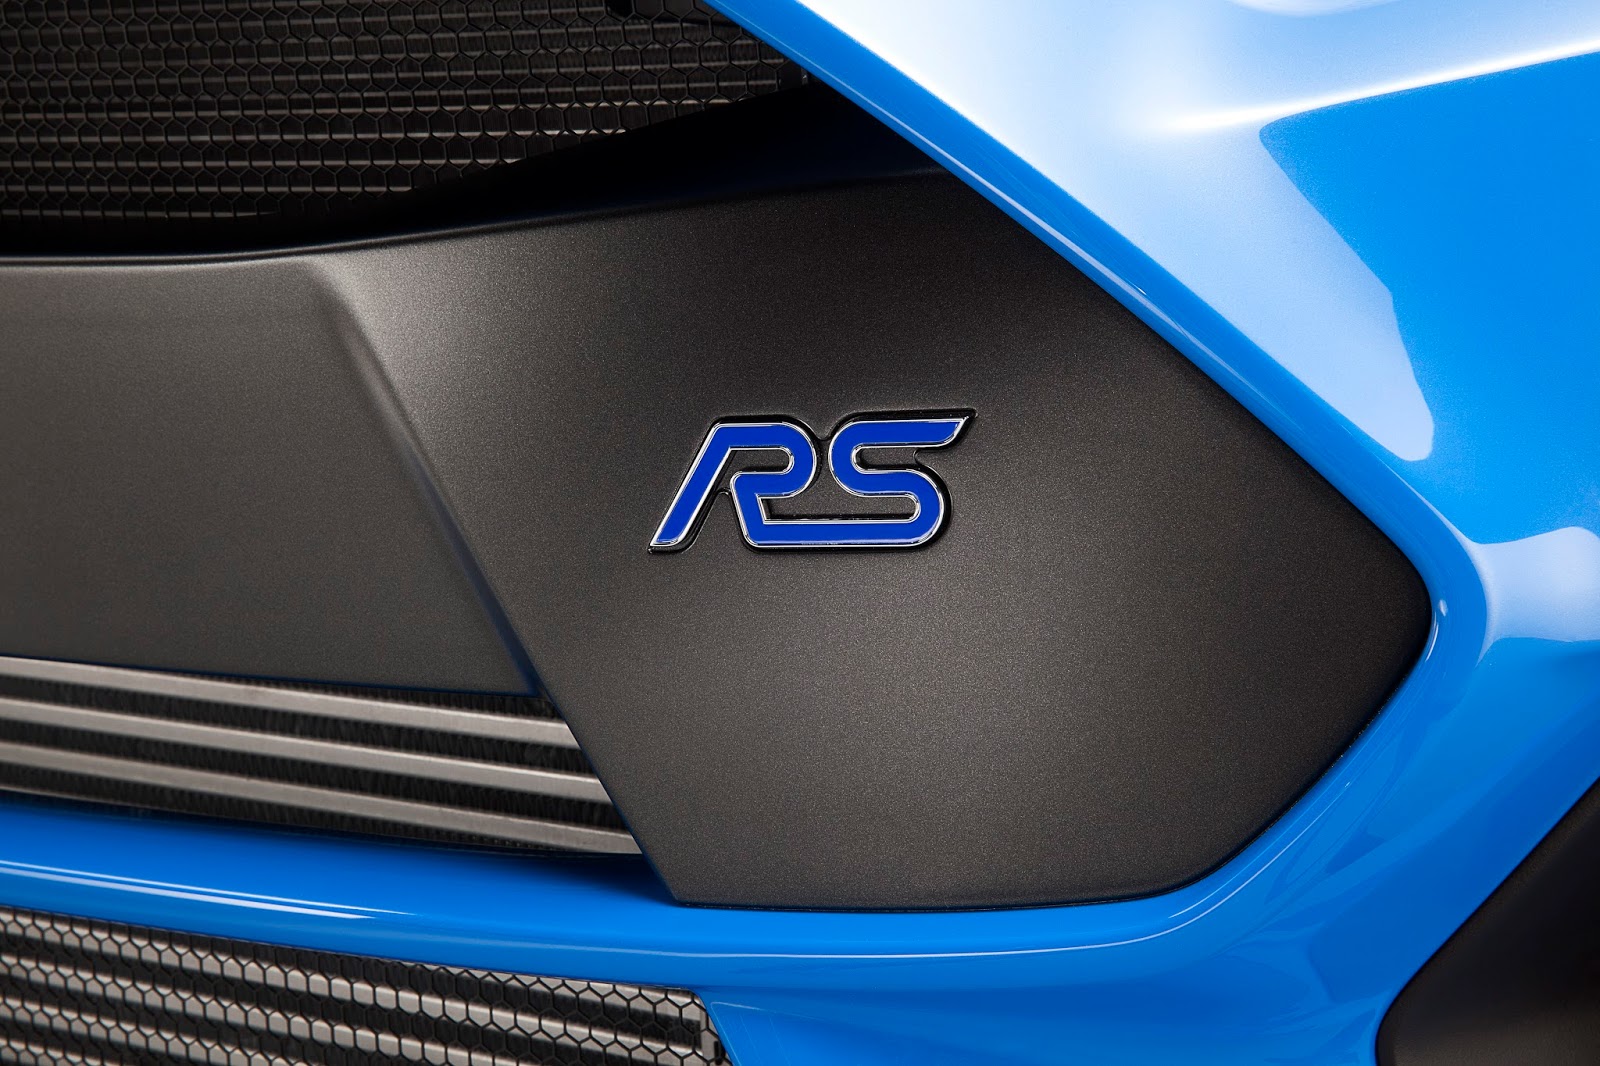 16FordFocusRS 10 HR Ford Focus RS Option Pack Edition : Το τέλειο βελτιώθηκε!